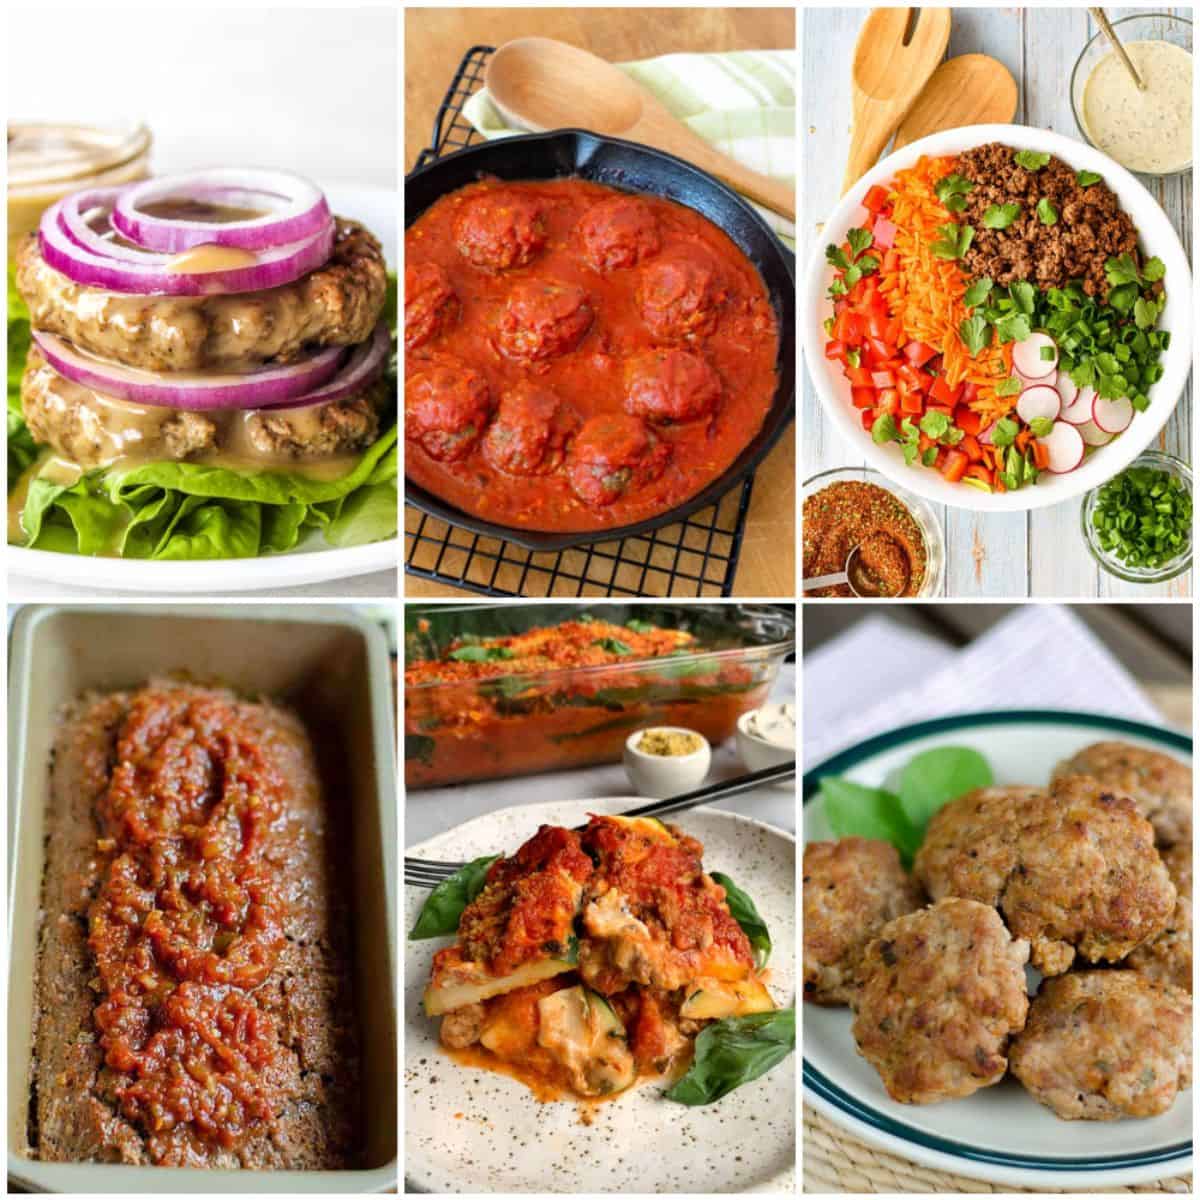 What To Make With Ground Turkey: Best Ground Turkey Recipes - Cook Eat Well